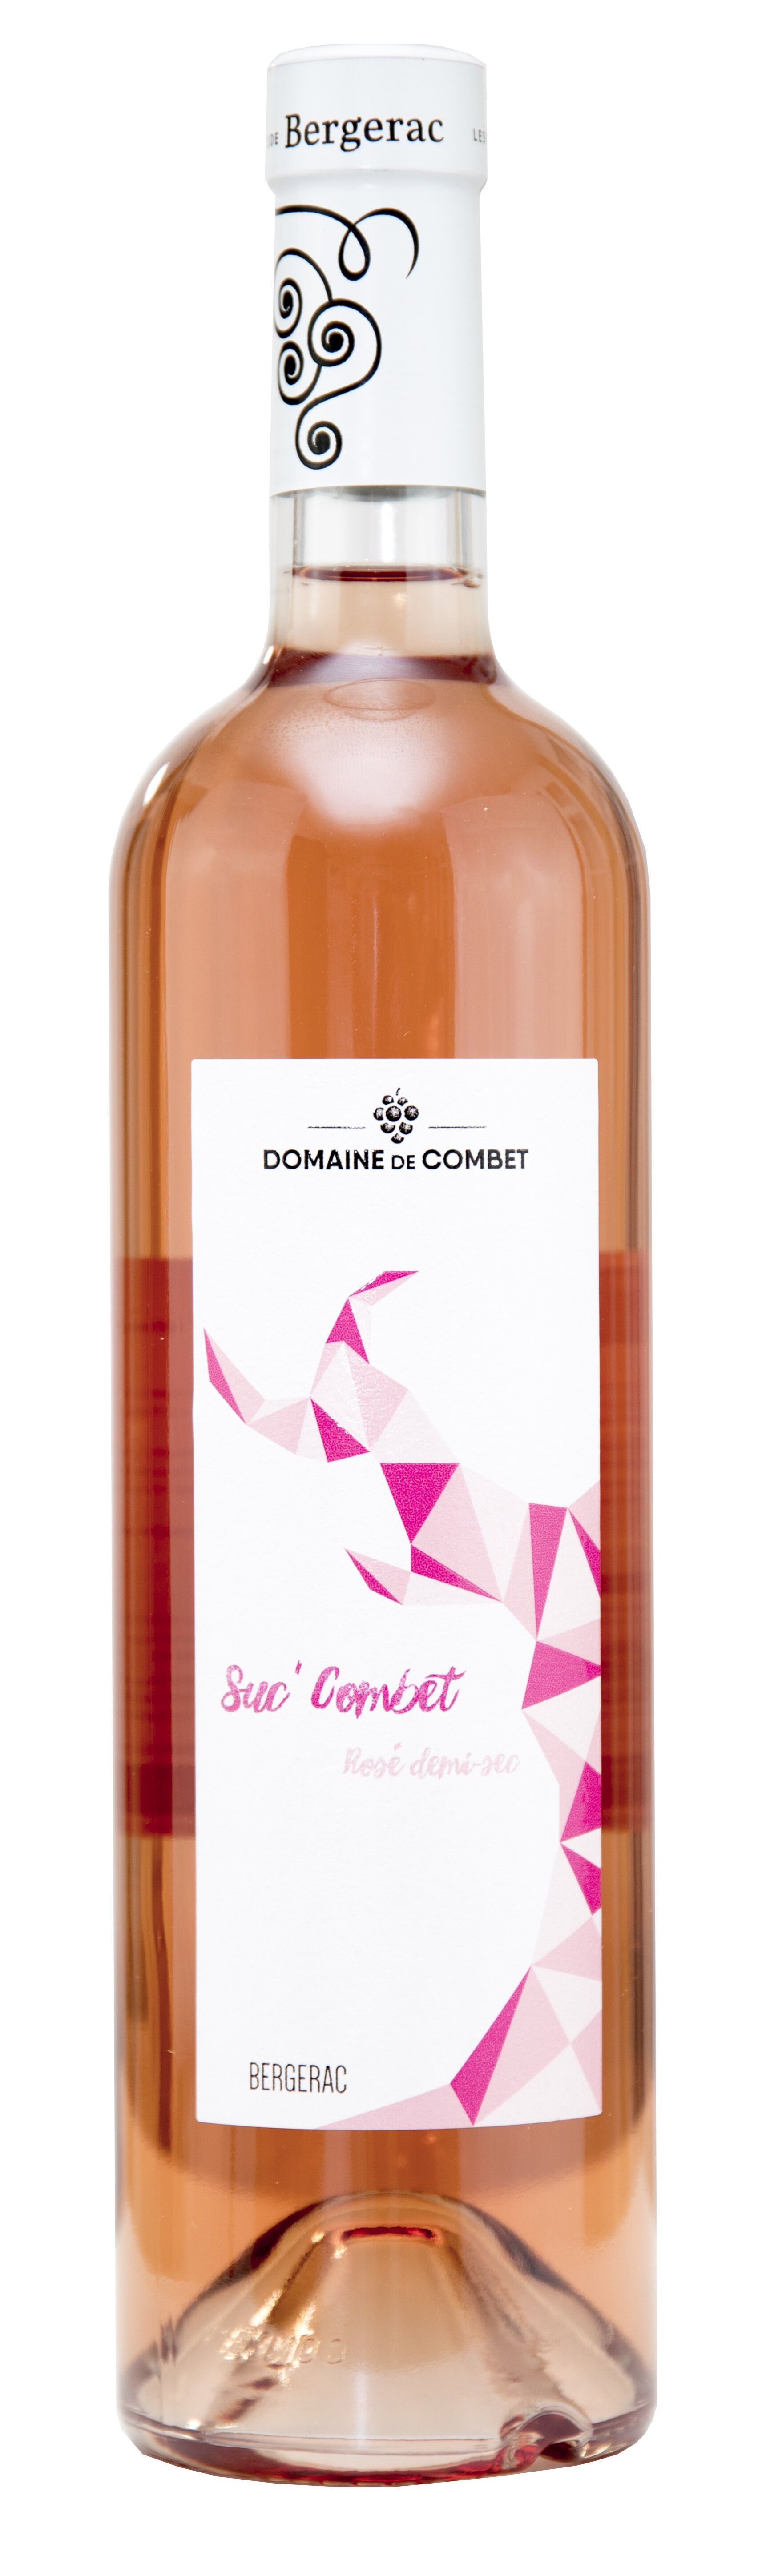 Earl de Combet SUC'COMBET, Rosato, 2021, Bergerac. Bottle image